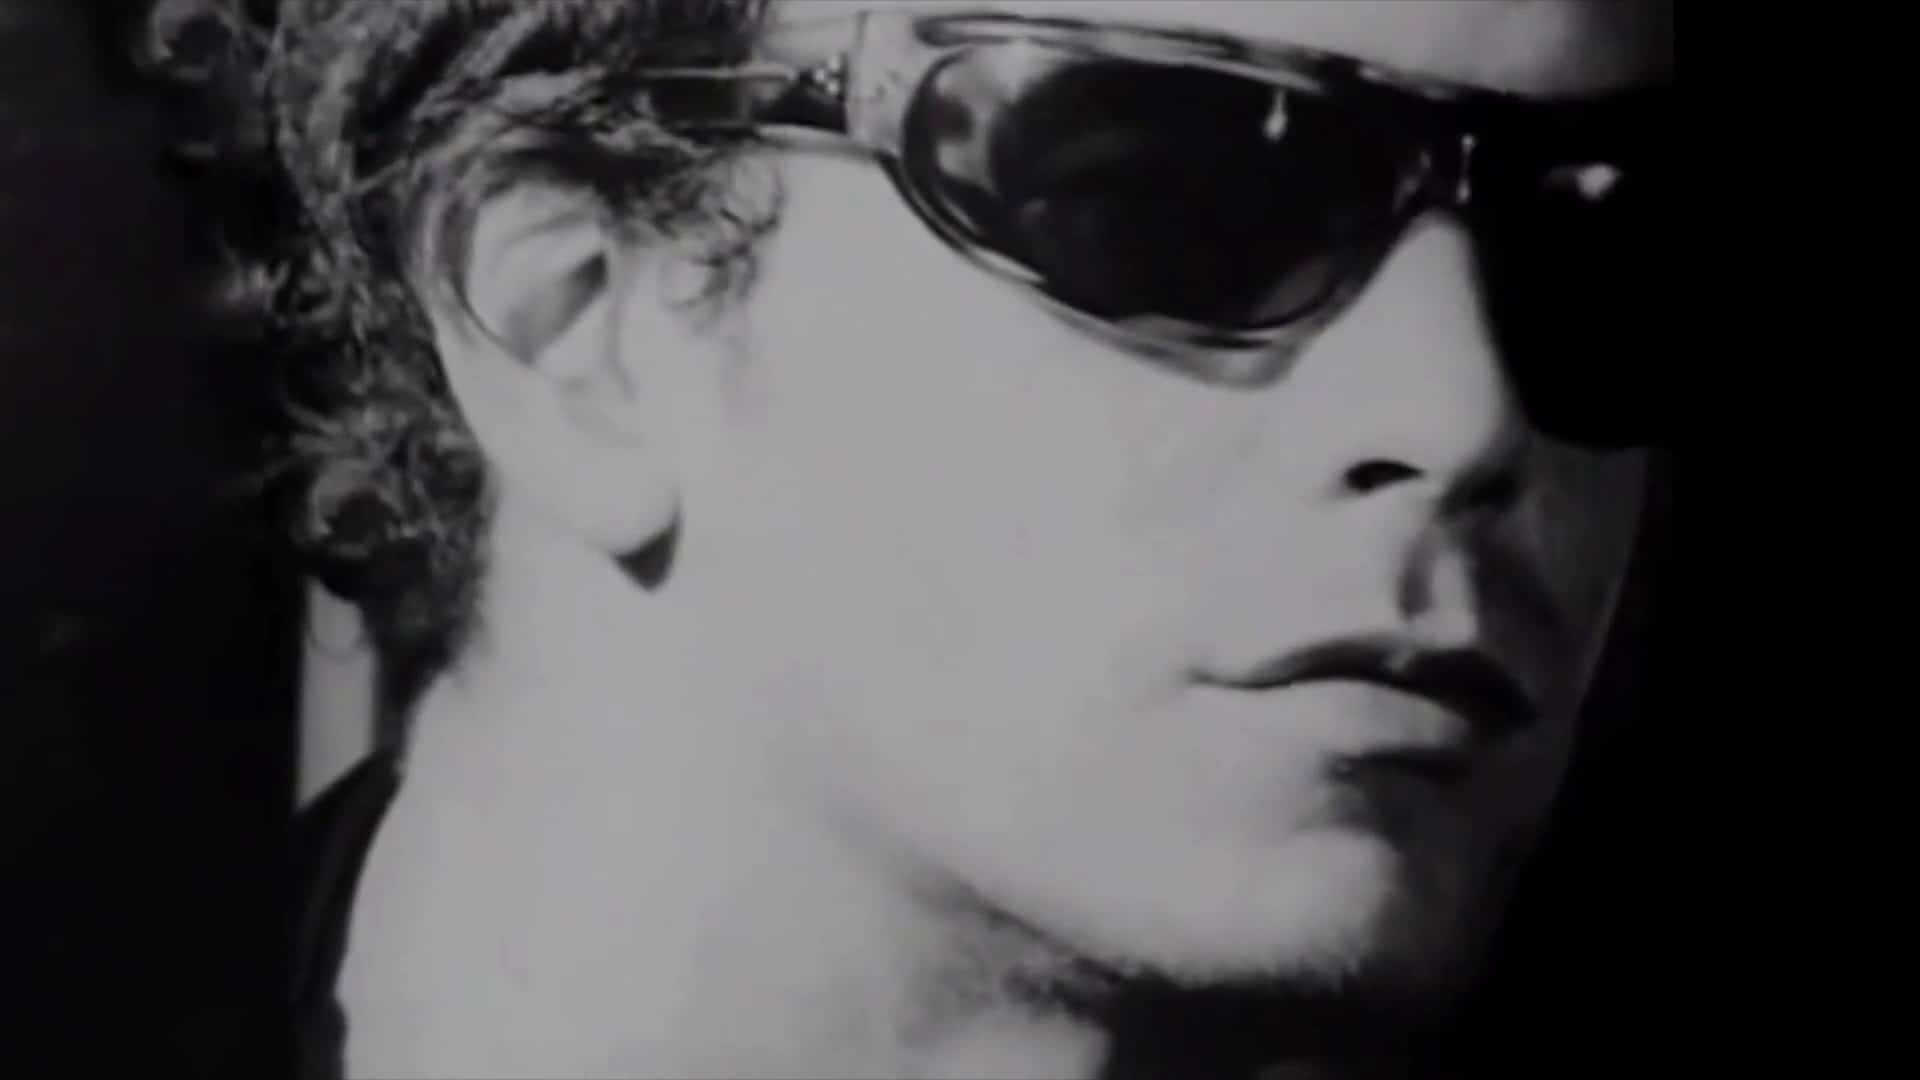 The Velvet Underground - Heroin - Nico - Lou Reed